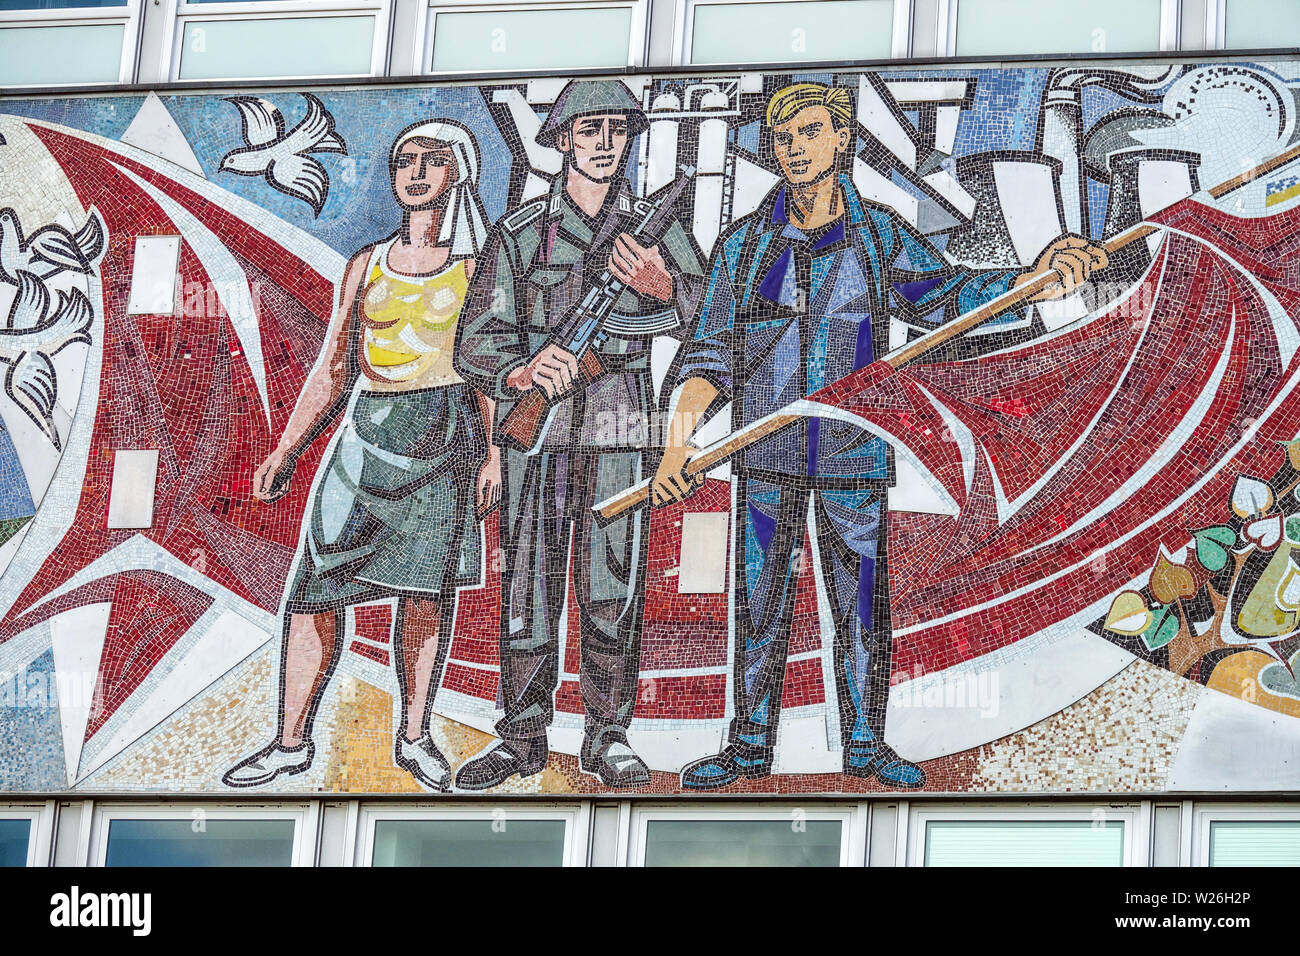 Mosaic of socialist realism art on a building 1960s Walter Womacka's work on facade Haus des Lehrers, Berlin Germany Communist art DDR propaganda Stock Photo